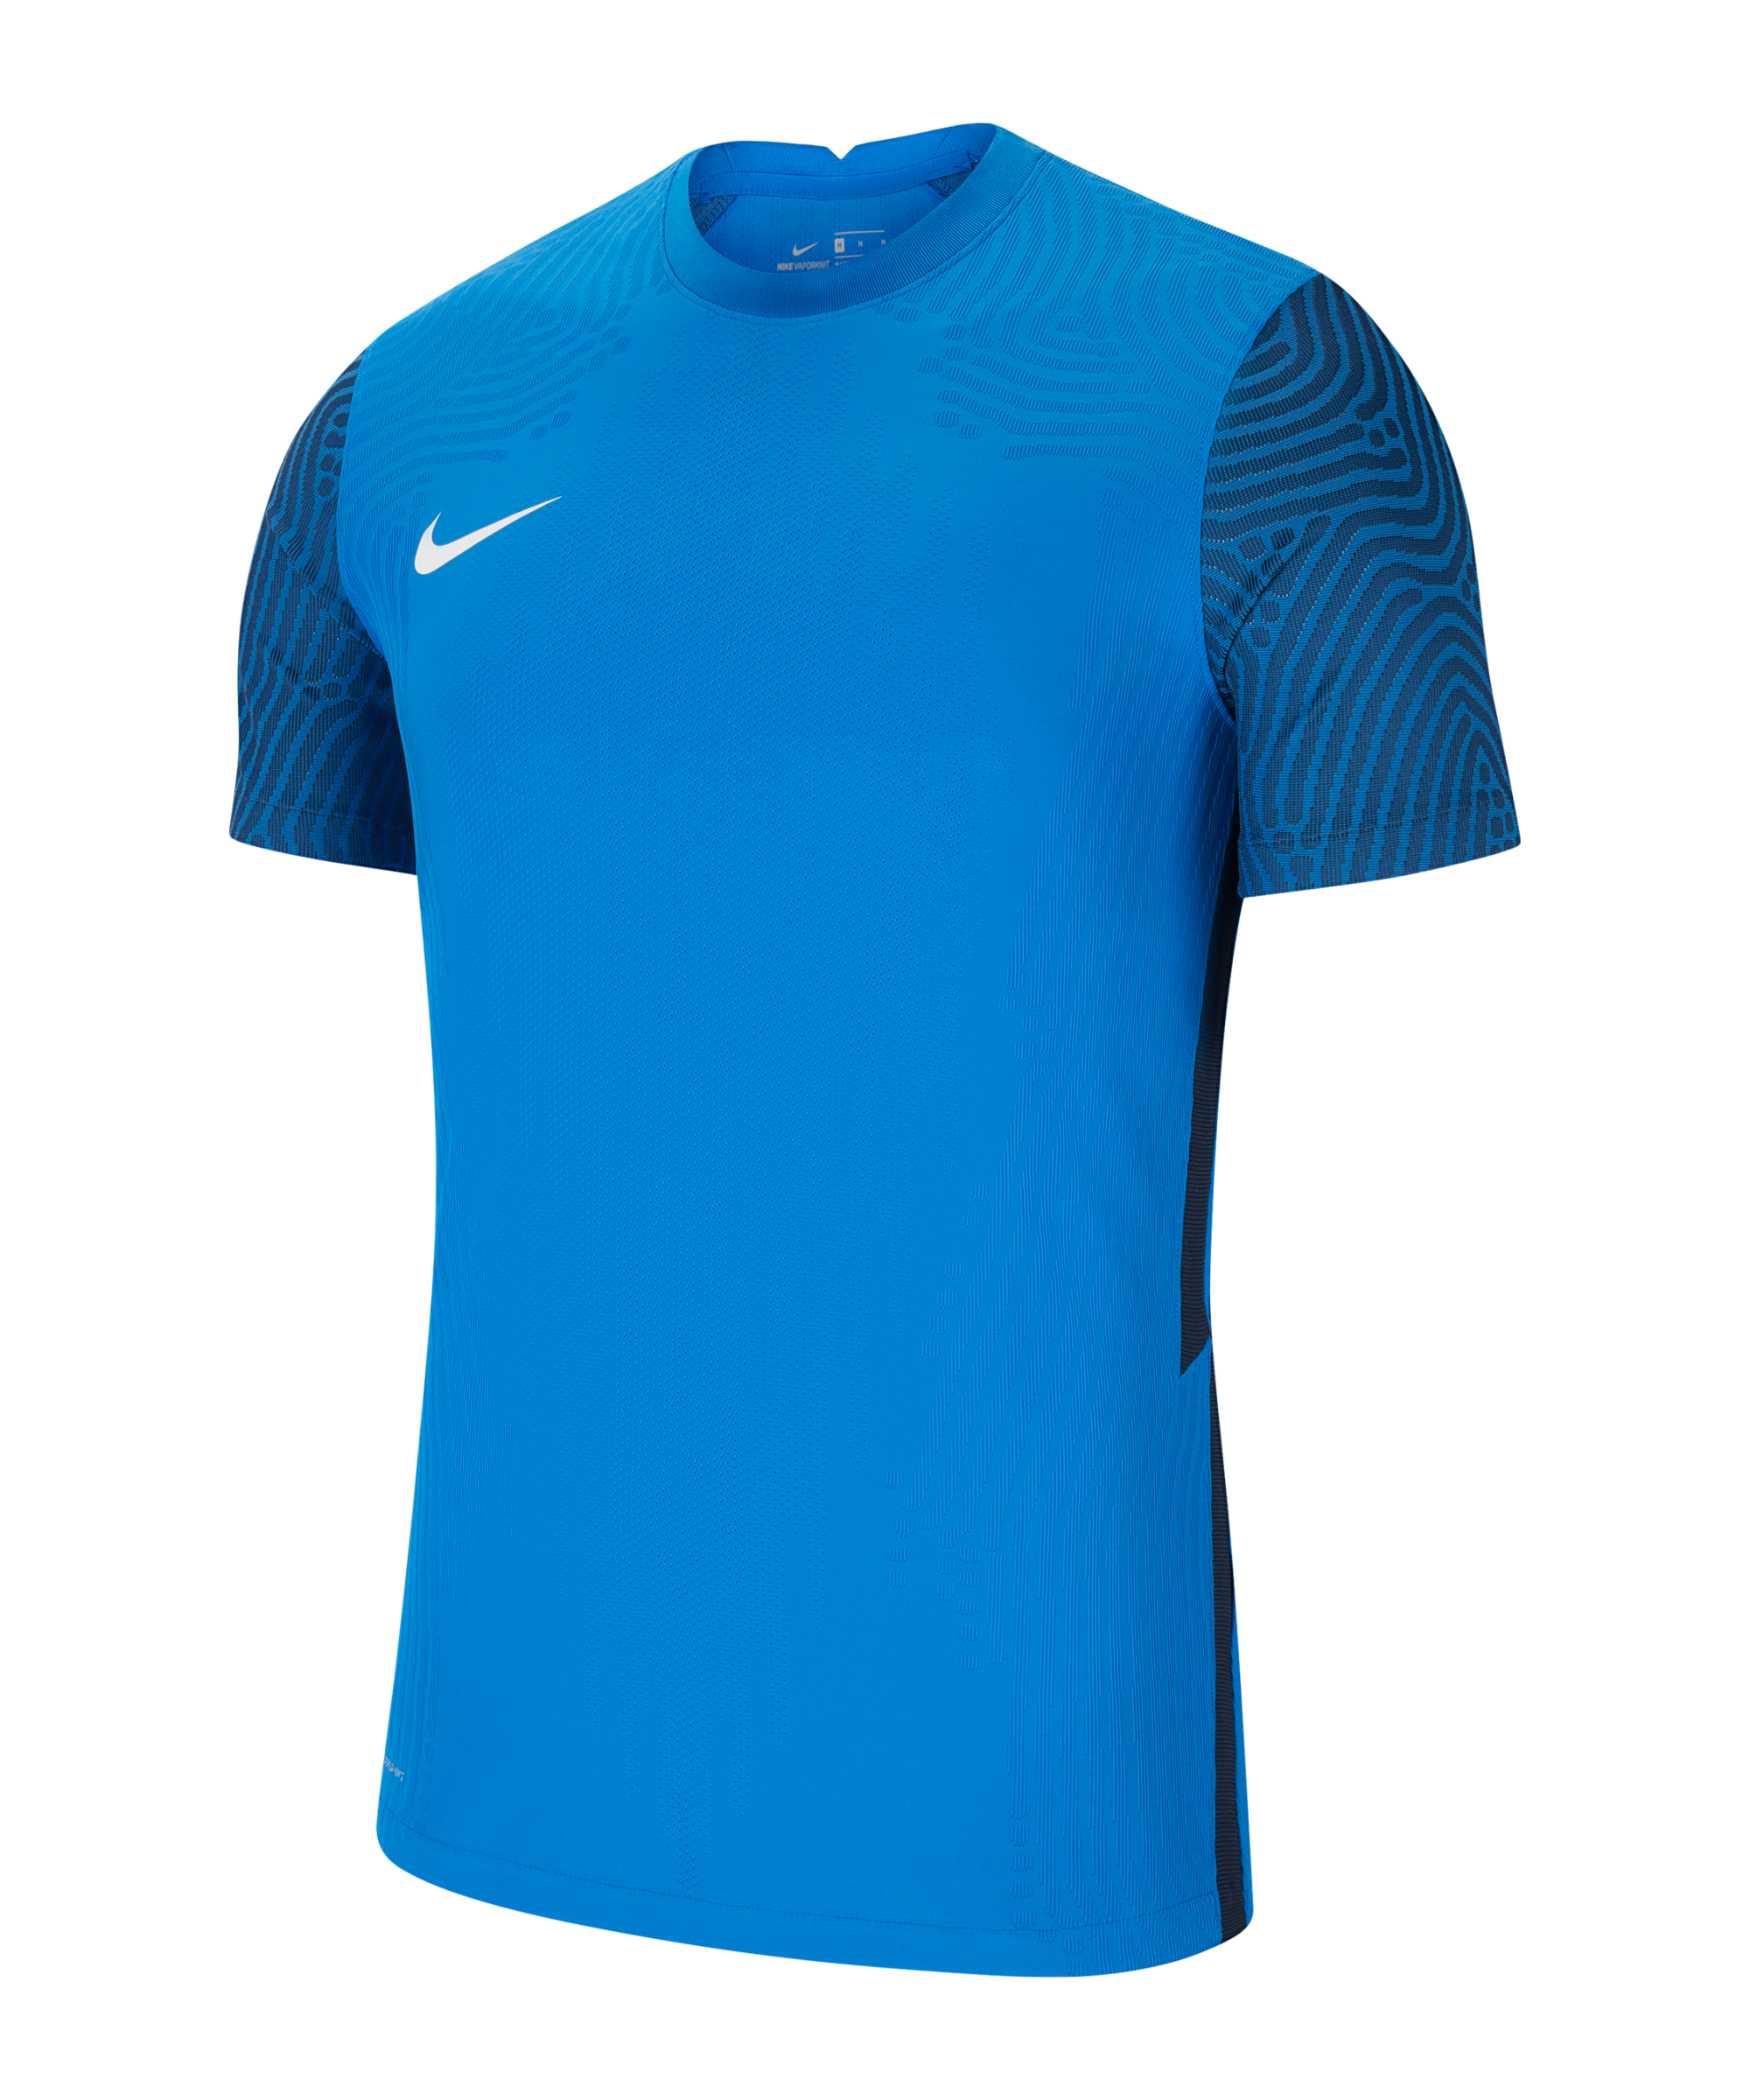 Nike Vaporknit IV Jersey in Black - Size L